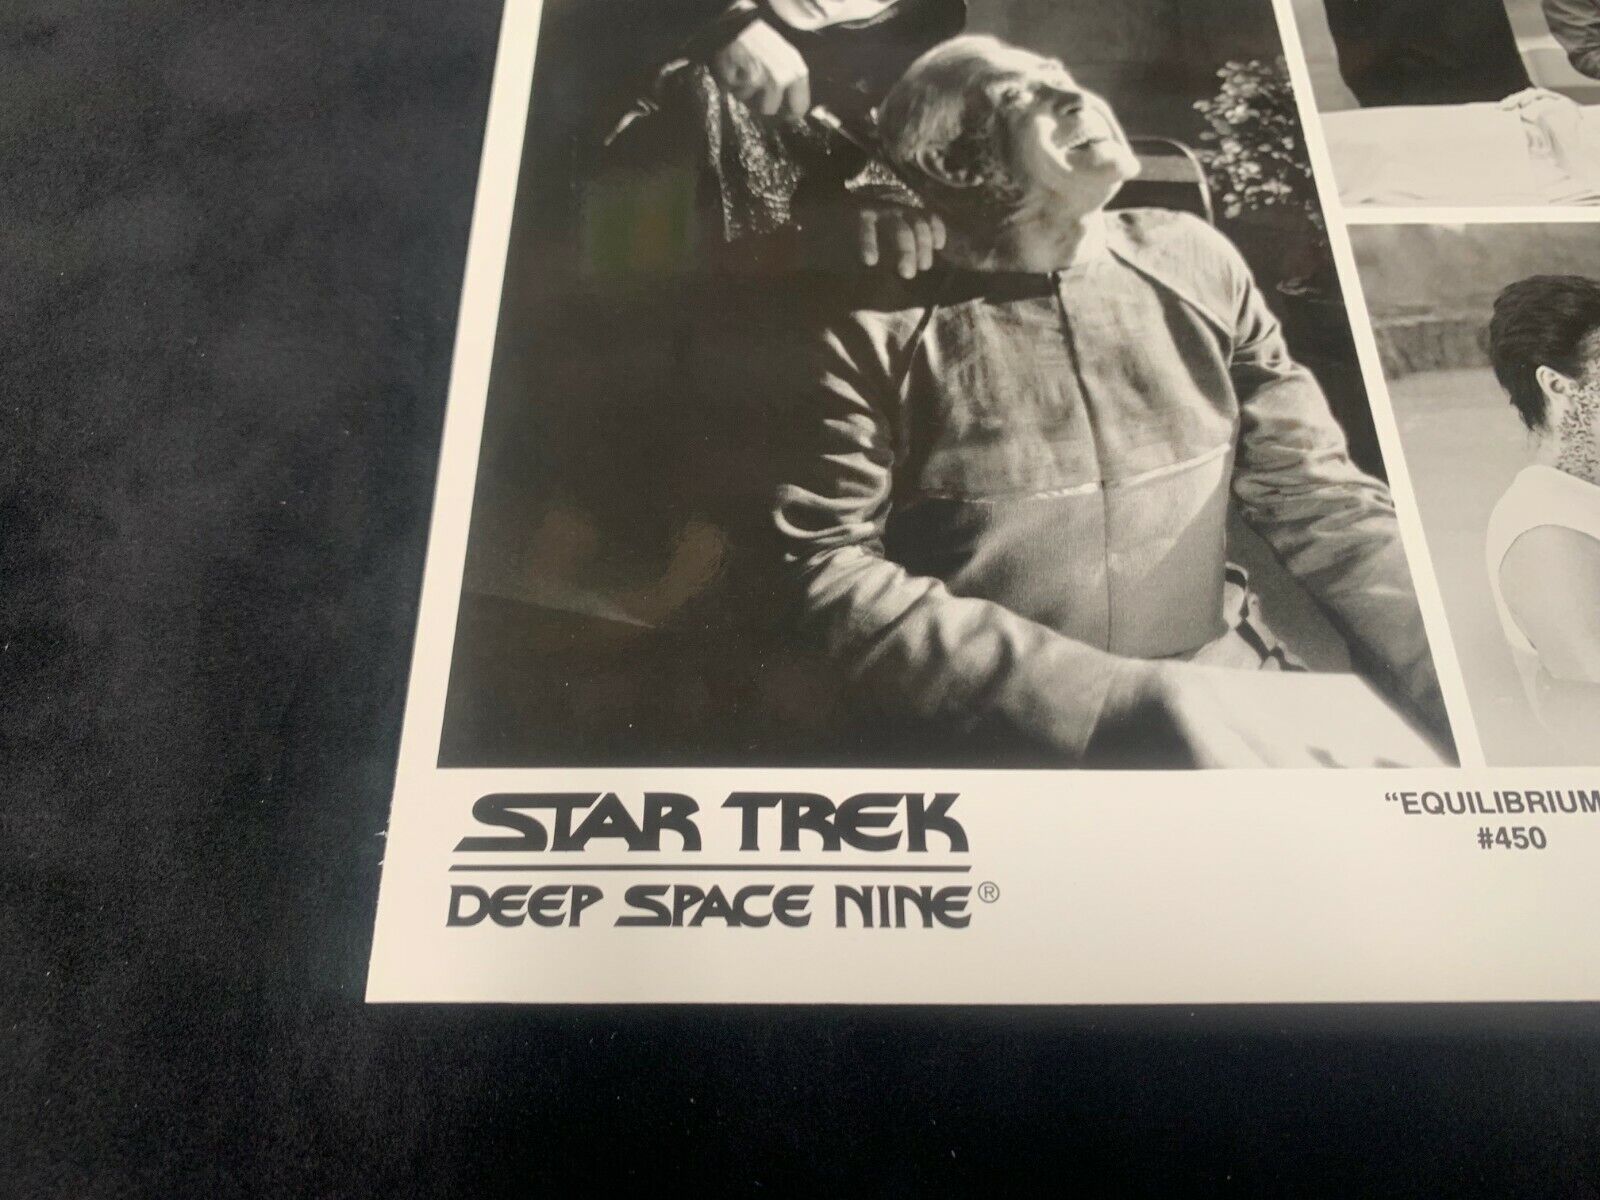 Star Trek Deep Space Nine 8x10 B&W Photo of Equilibrium 450